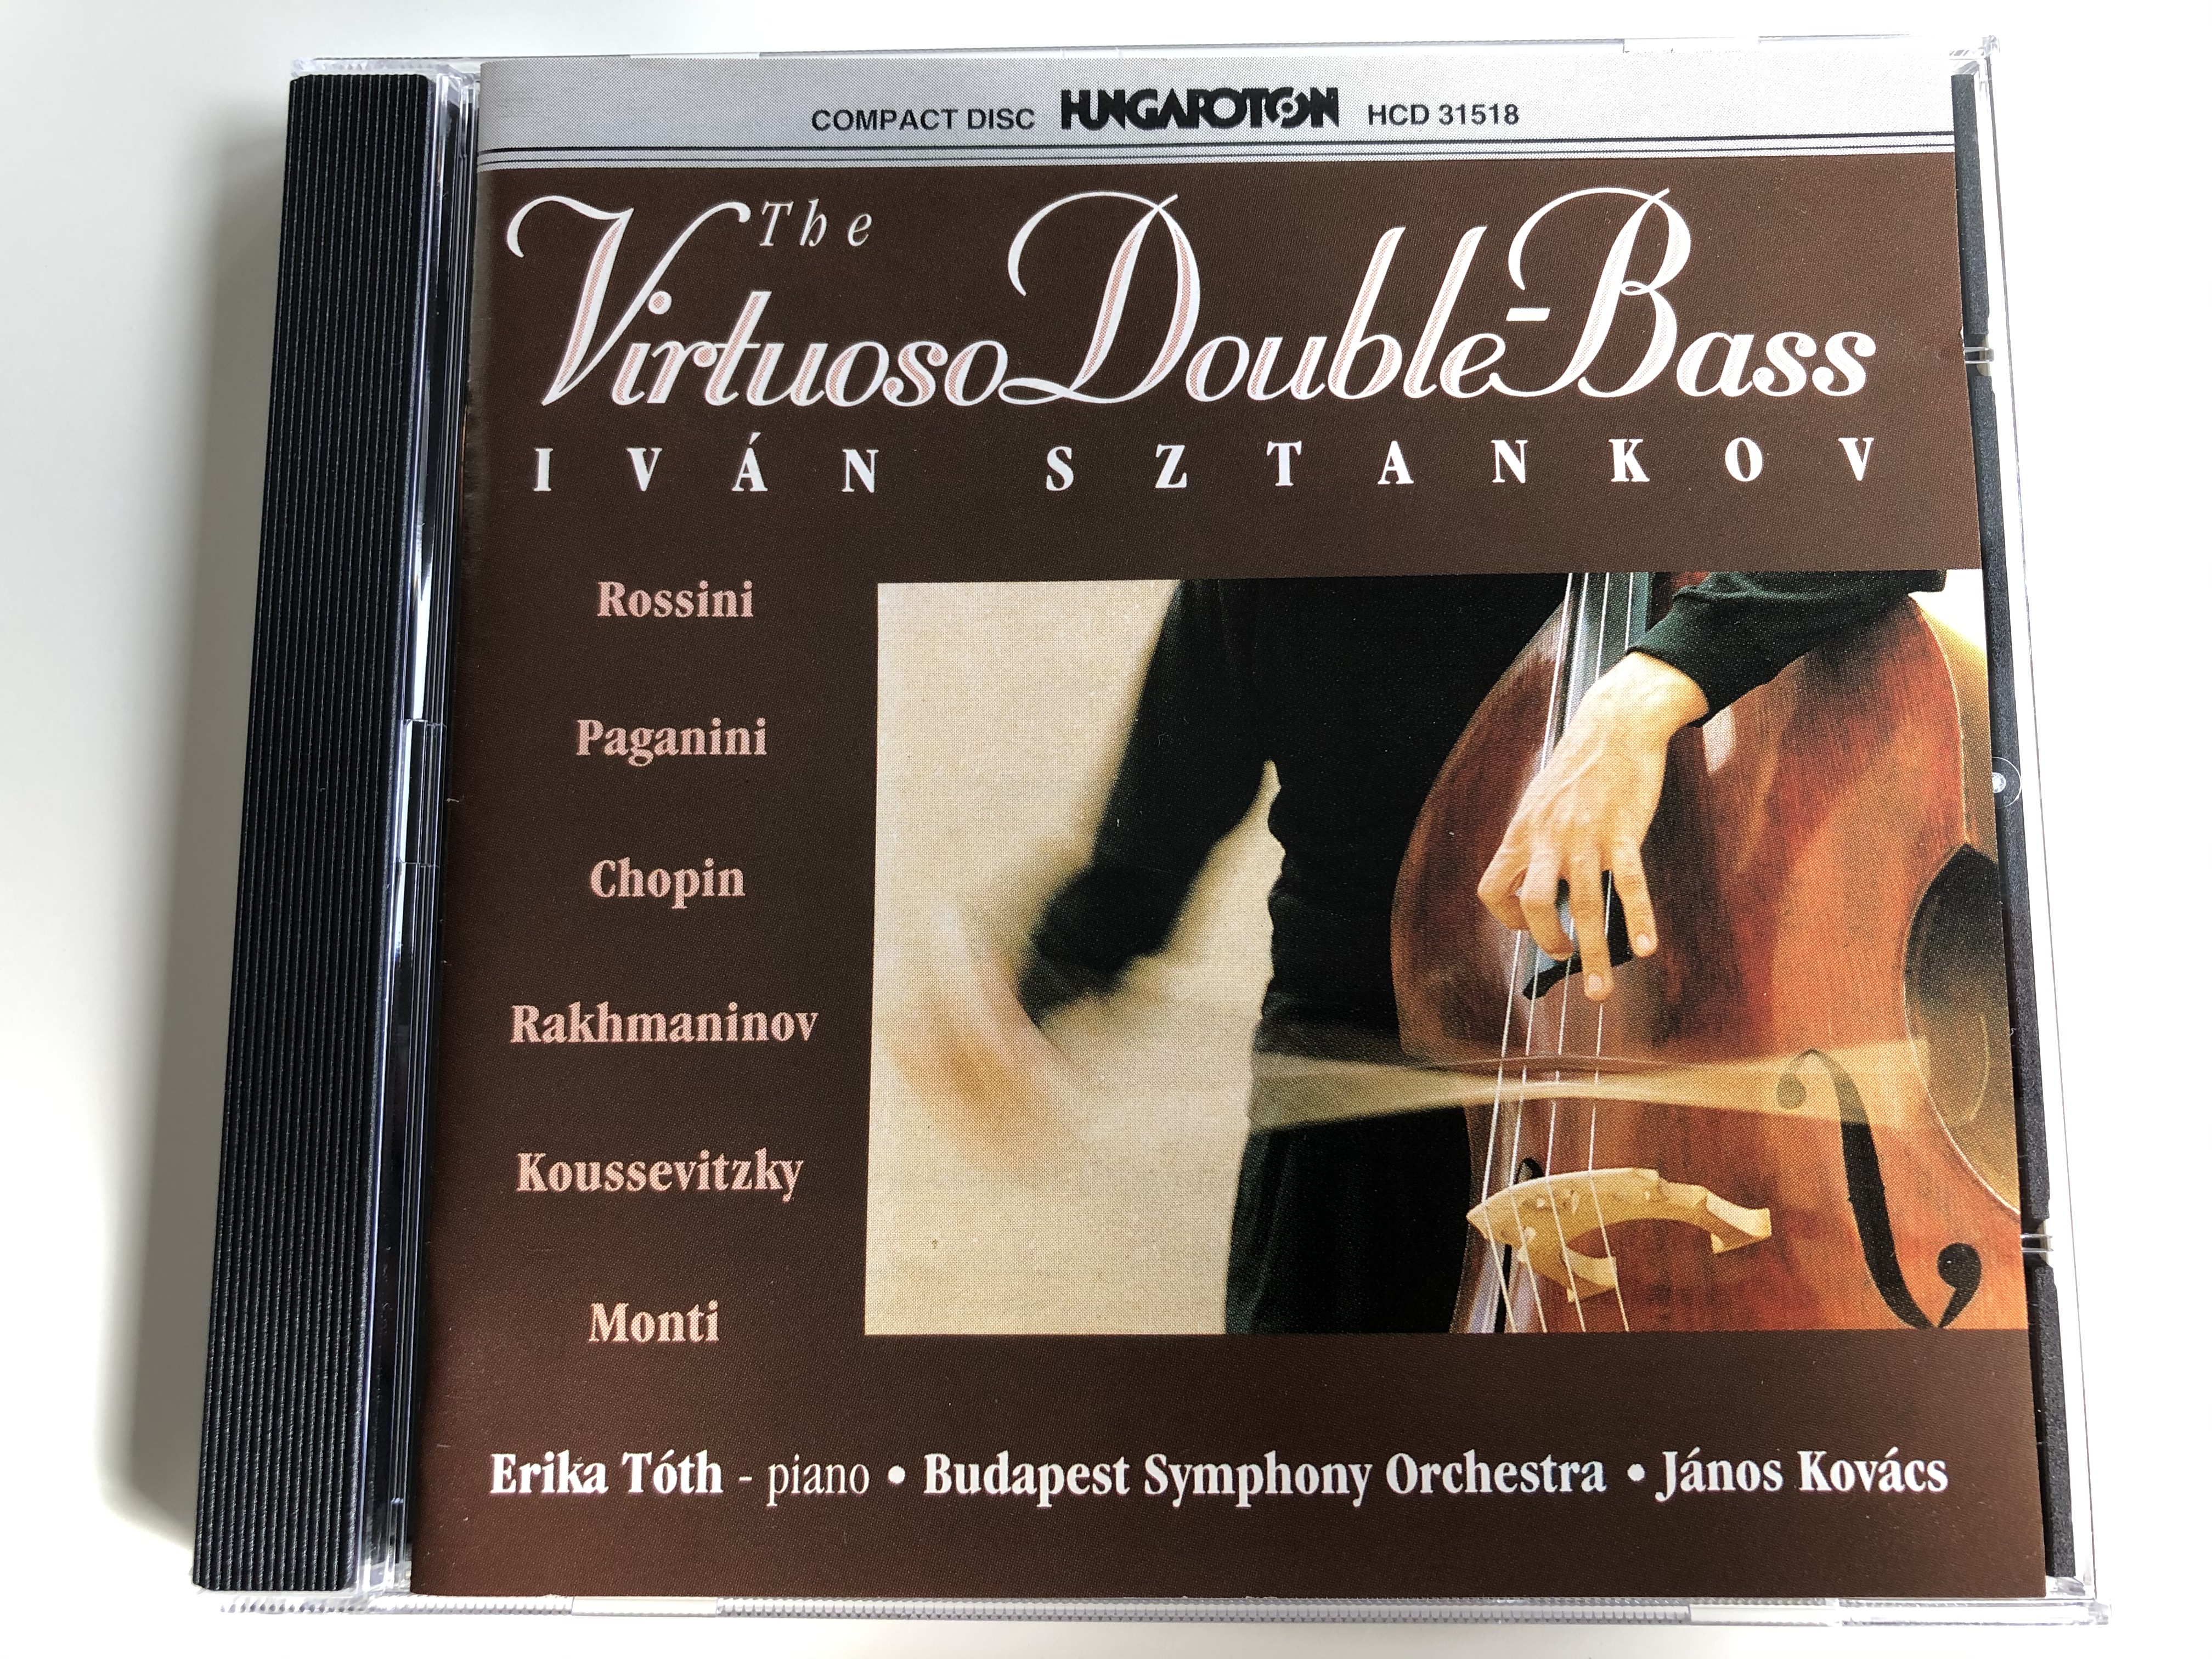 the-virtuoso-double-bass-iv-n-sztankov-rossini-paganini-chopin-rakhmaninov-koussevitzky-monti-piano-erika-toth-budapest-symphony-orchestra-conducted-janos-kovacs-hungaroton-audio-cd-19-1-.jpg